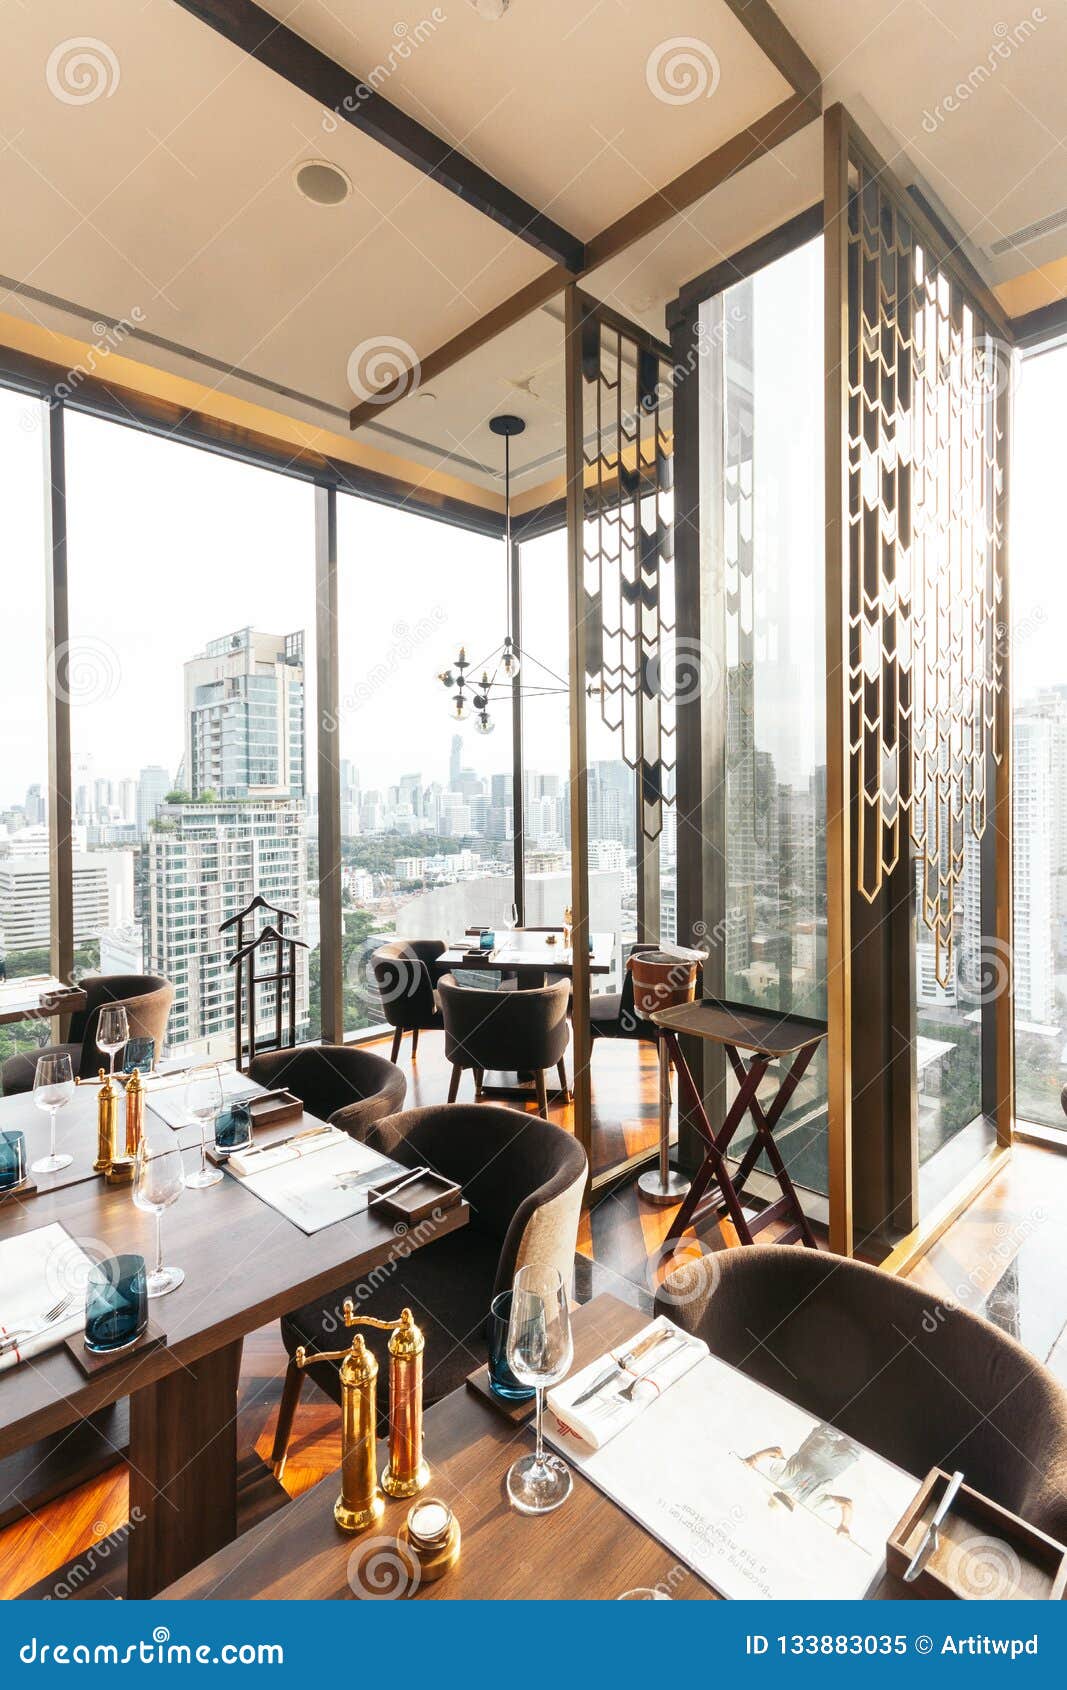 Modern Luxury Decorated Interior Restaurant That Can View